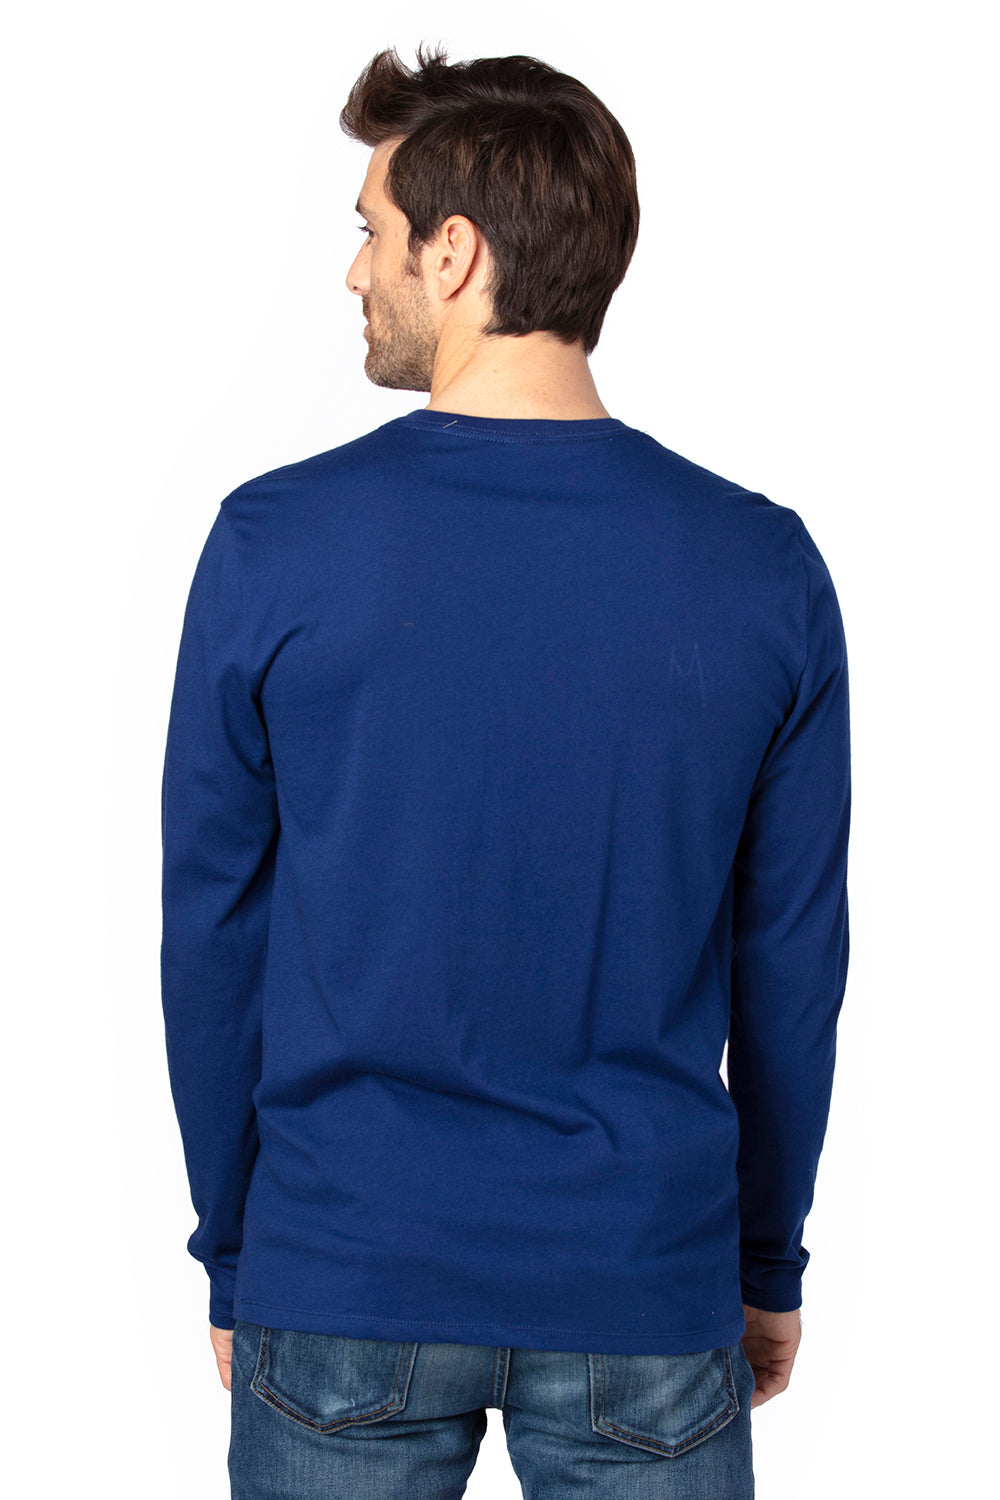 Threadfast Apparel 100LS Mens Ultimate Long Sleeve Crewneck T-Shirt Navy Blue Back